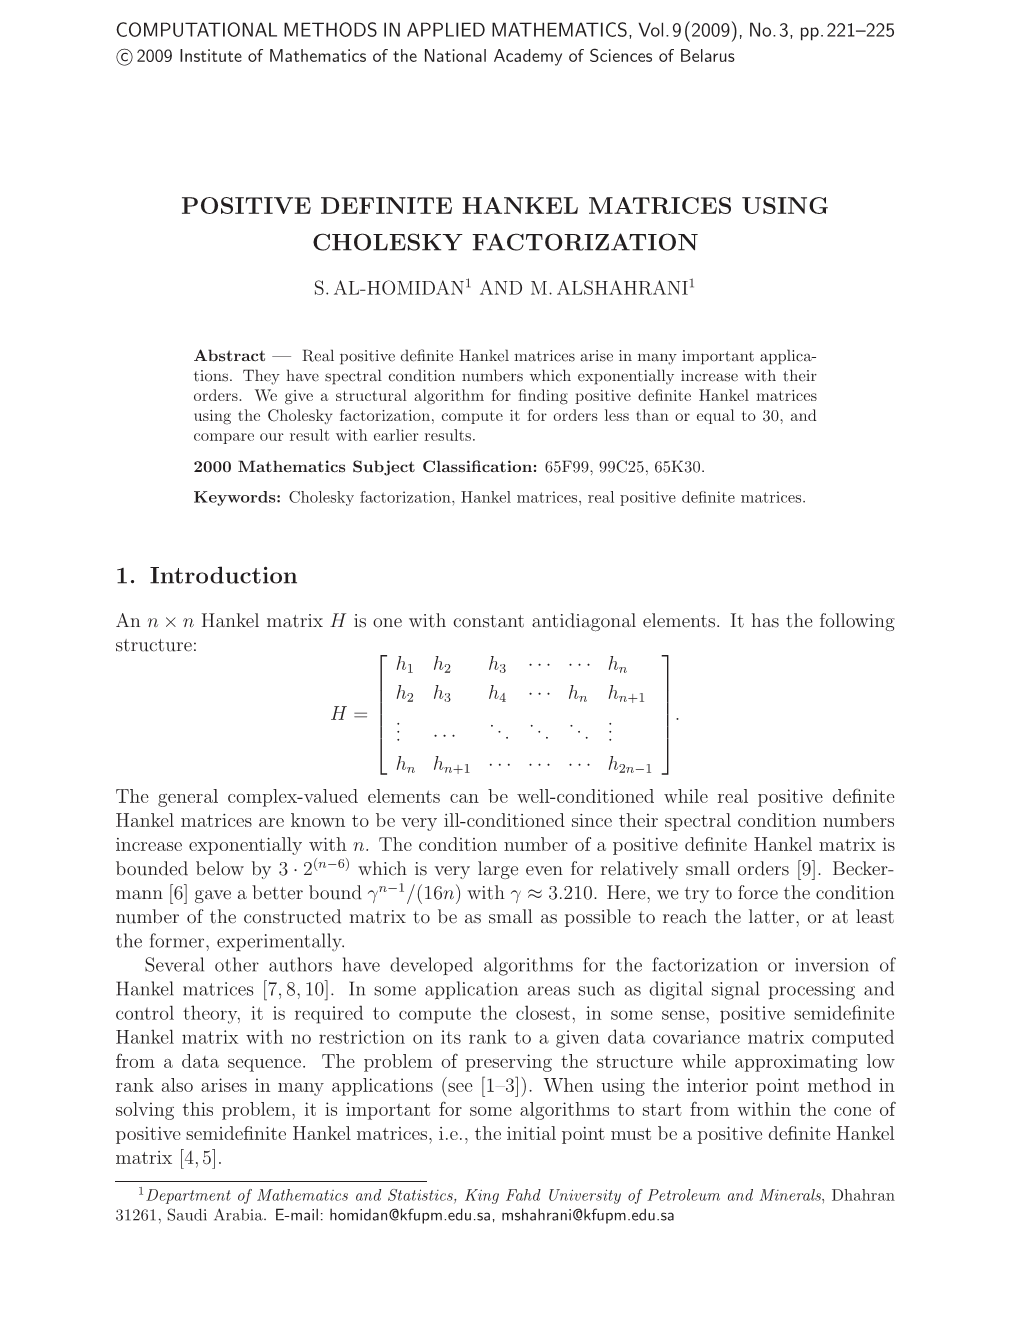 Positive Definite Hankel Matrices Using Cholesky Factorization